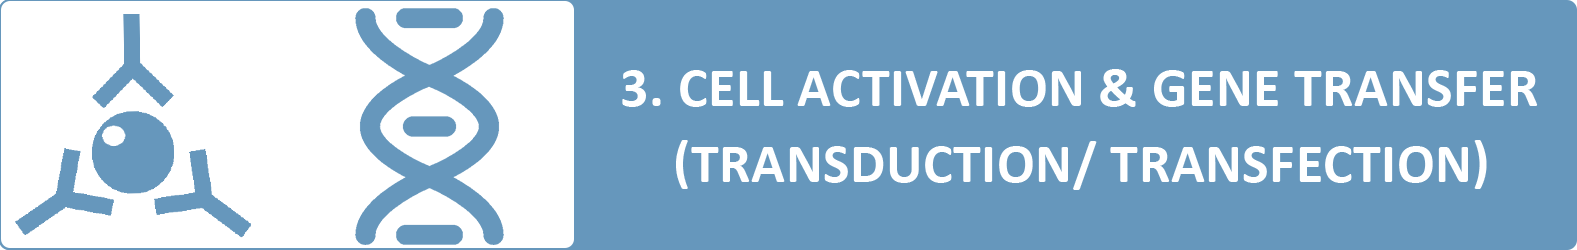 cell activation & gene transfer